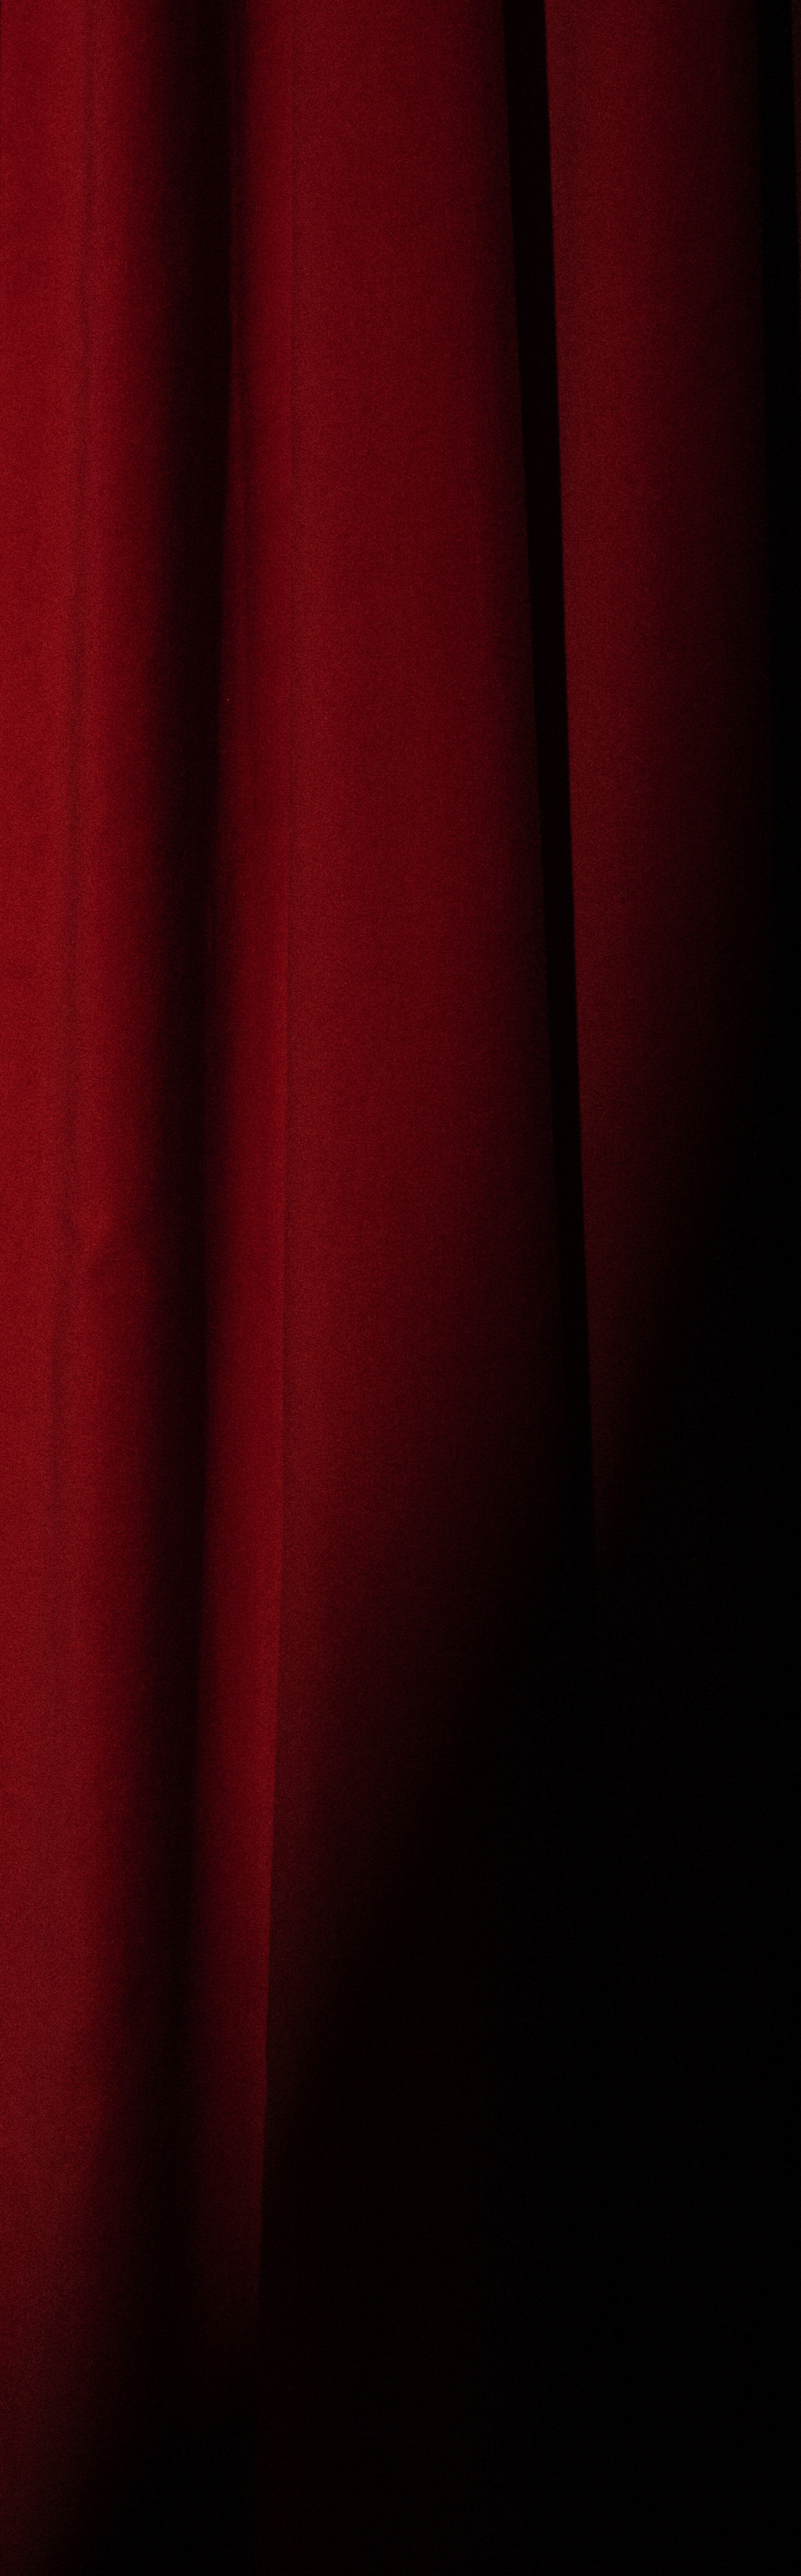 curtain1.jpg